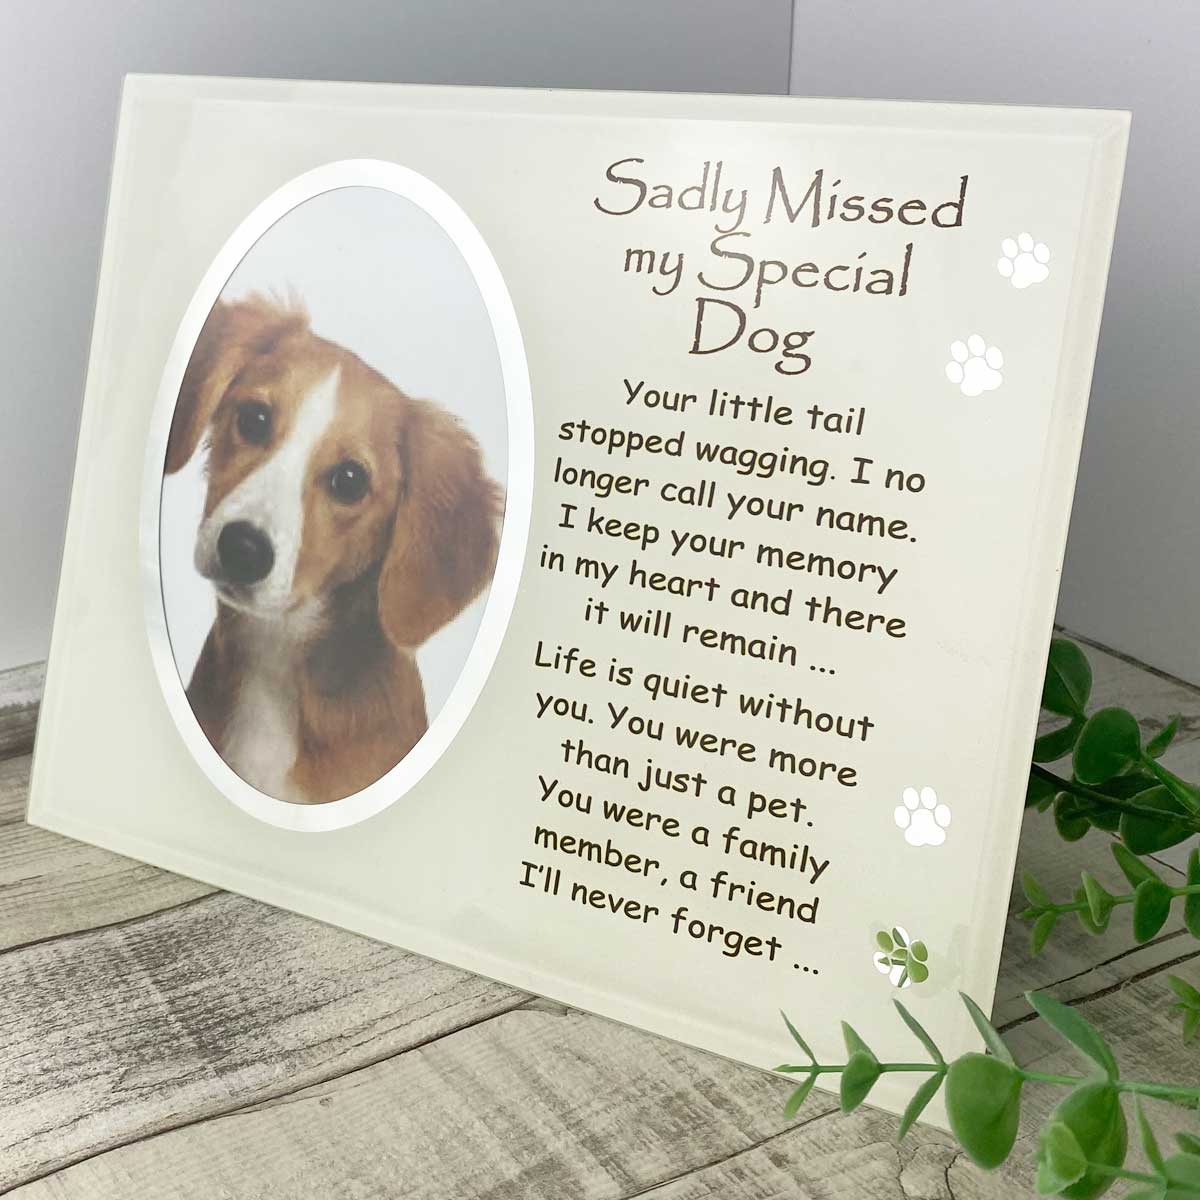 Sadly Missed my special dog memorial Glass frame